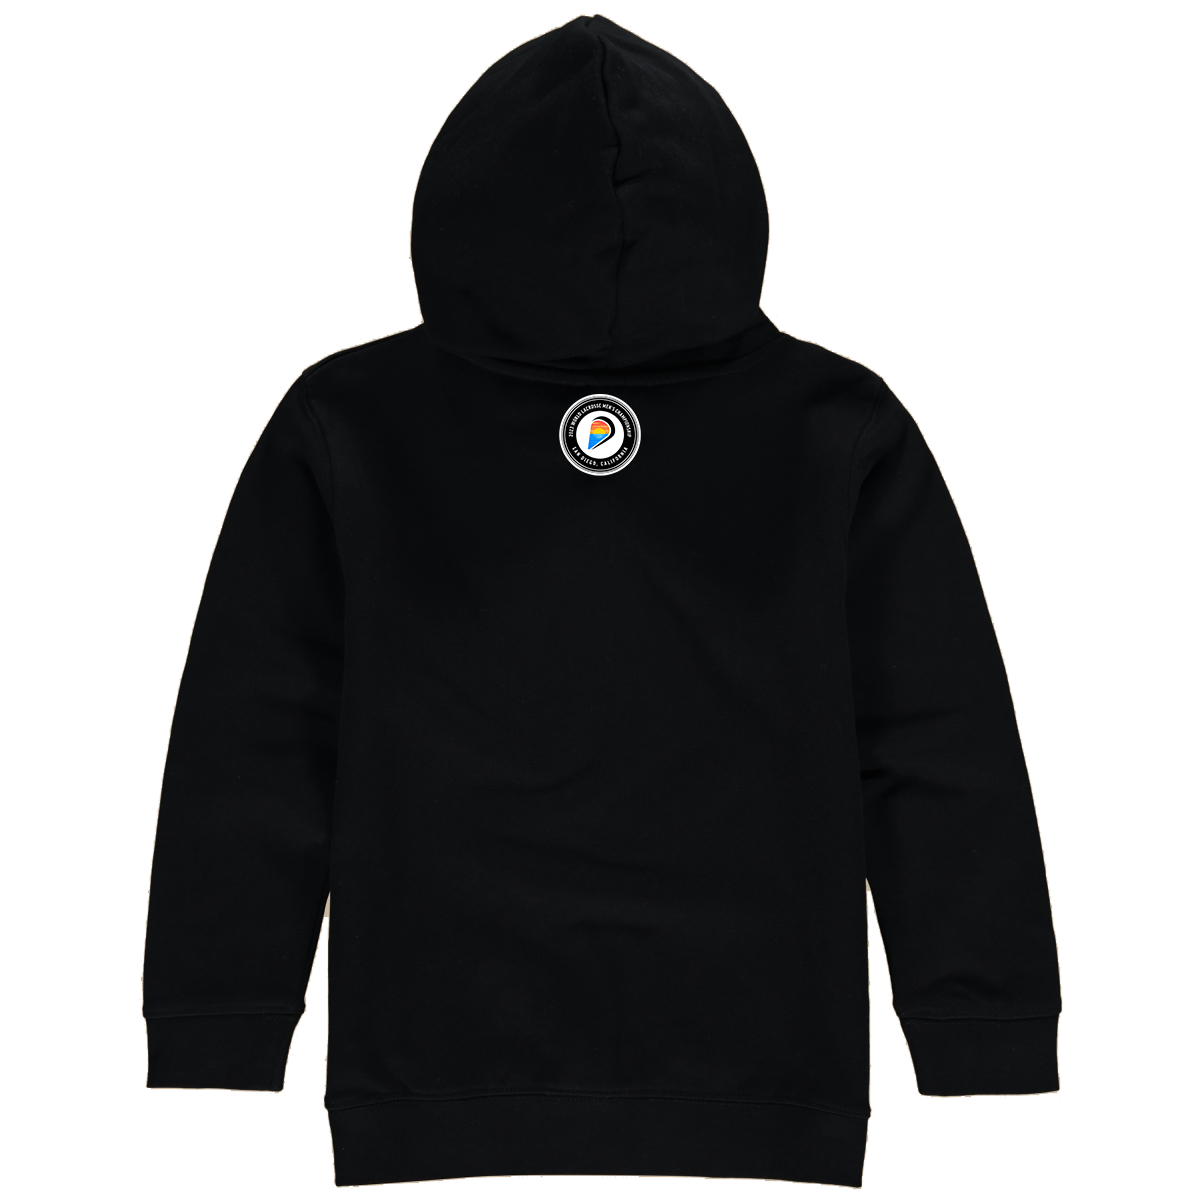 Canada Premium Unisex Hoodie Sweatshirt Black